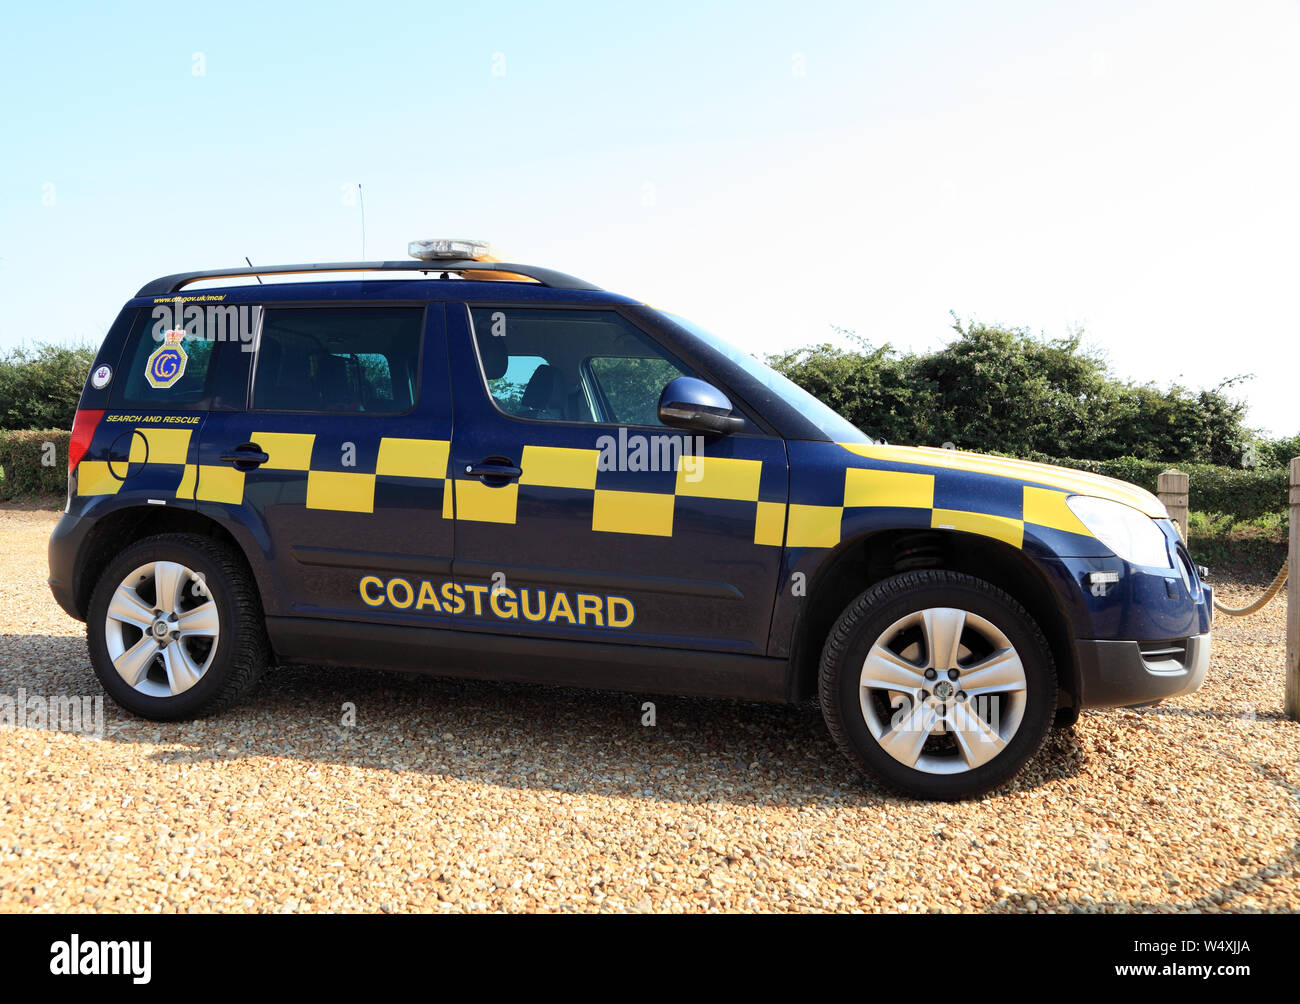 Coastguard, Search and Rescue vehicle, Norfolk, England, UK Stock Photo